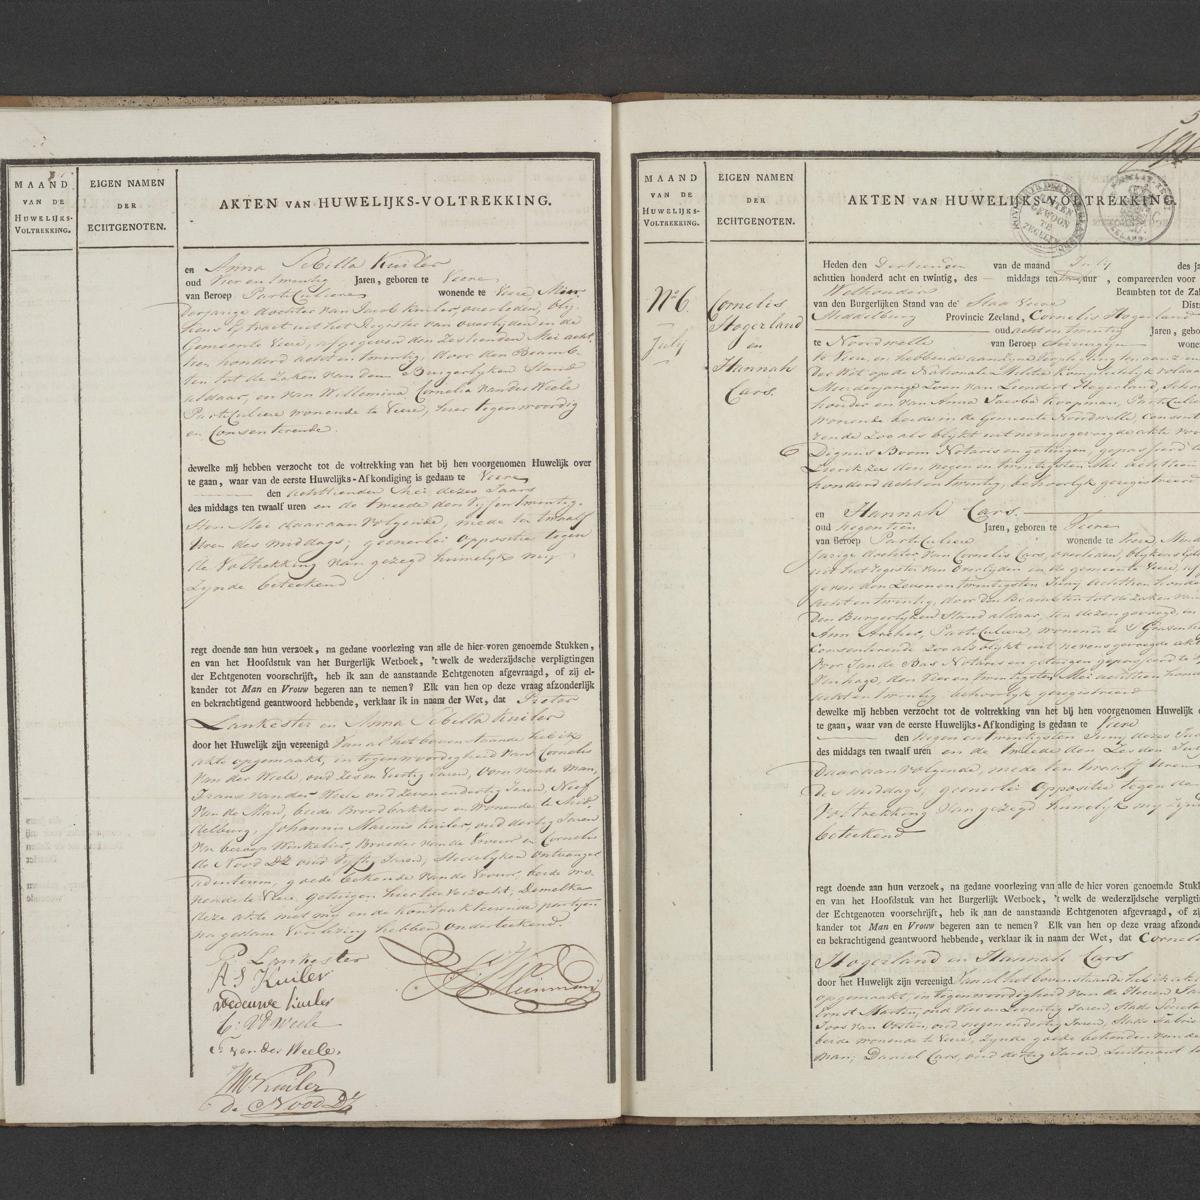 Civil registry of marriages, Veere, 1828, records 5-6